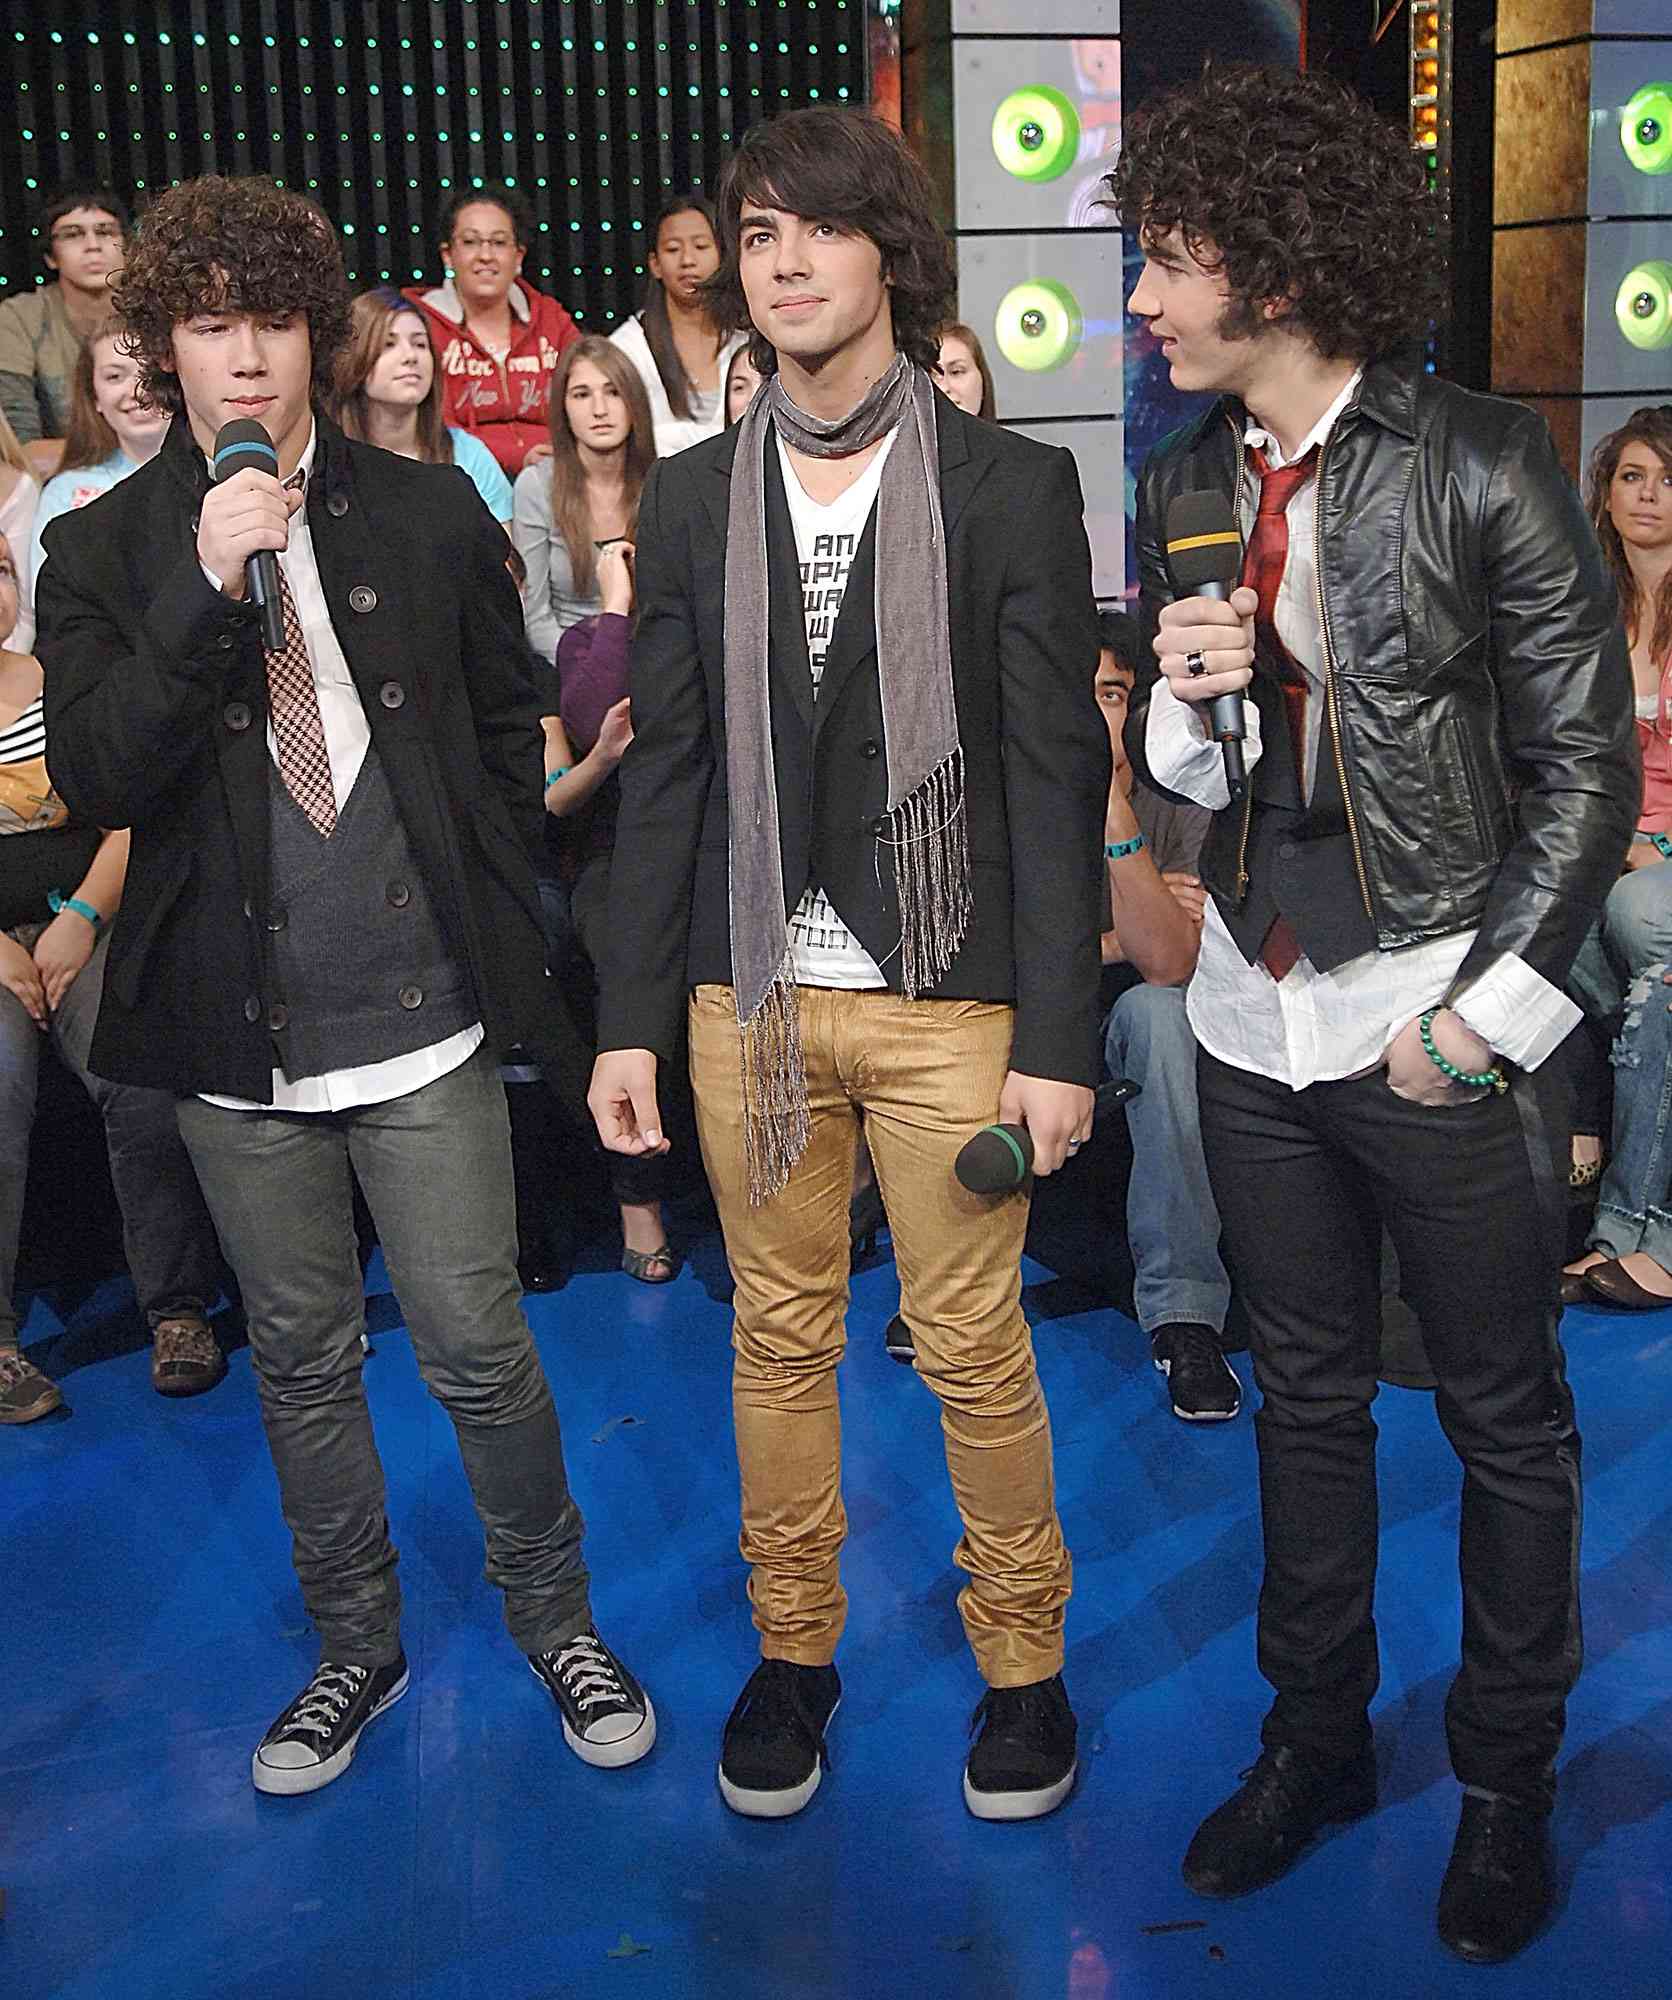 Jessica Alba, Alicia Keys and The Jonas Brothers Visit MTV's "TRL" - November 13, 2007